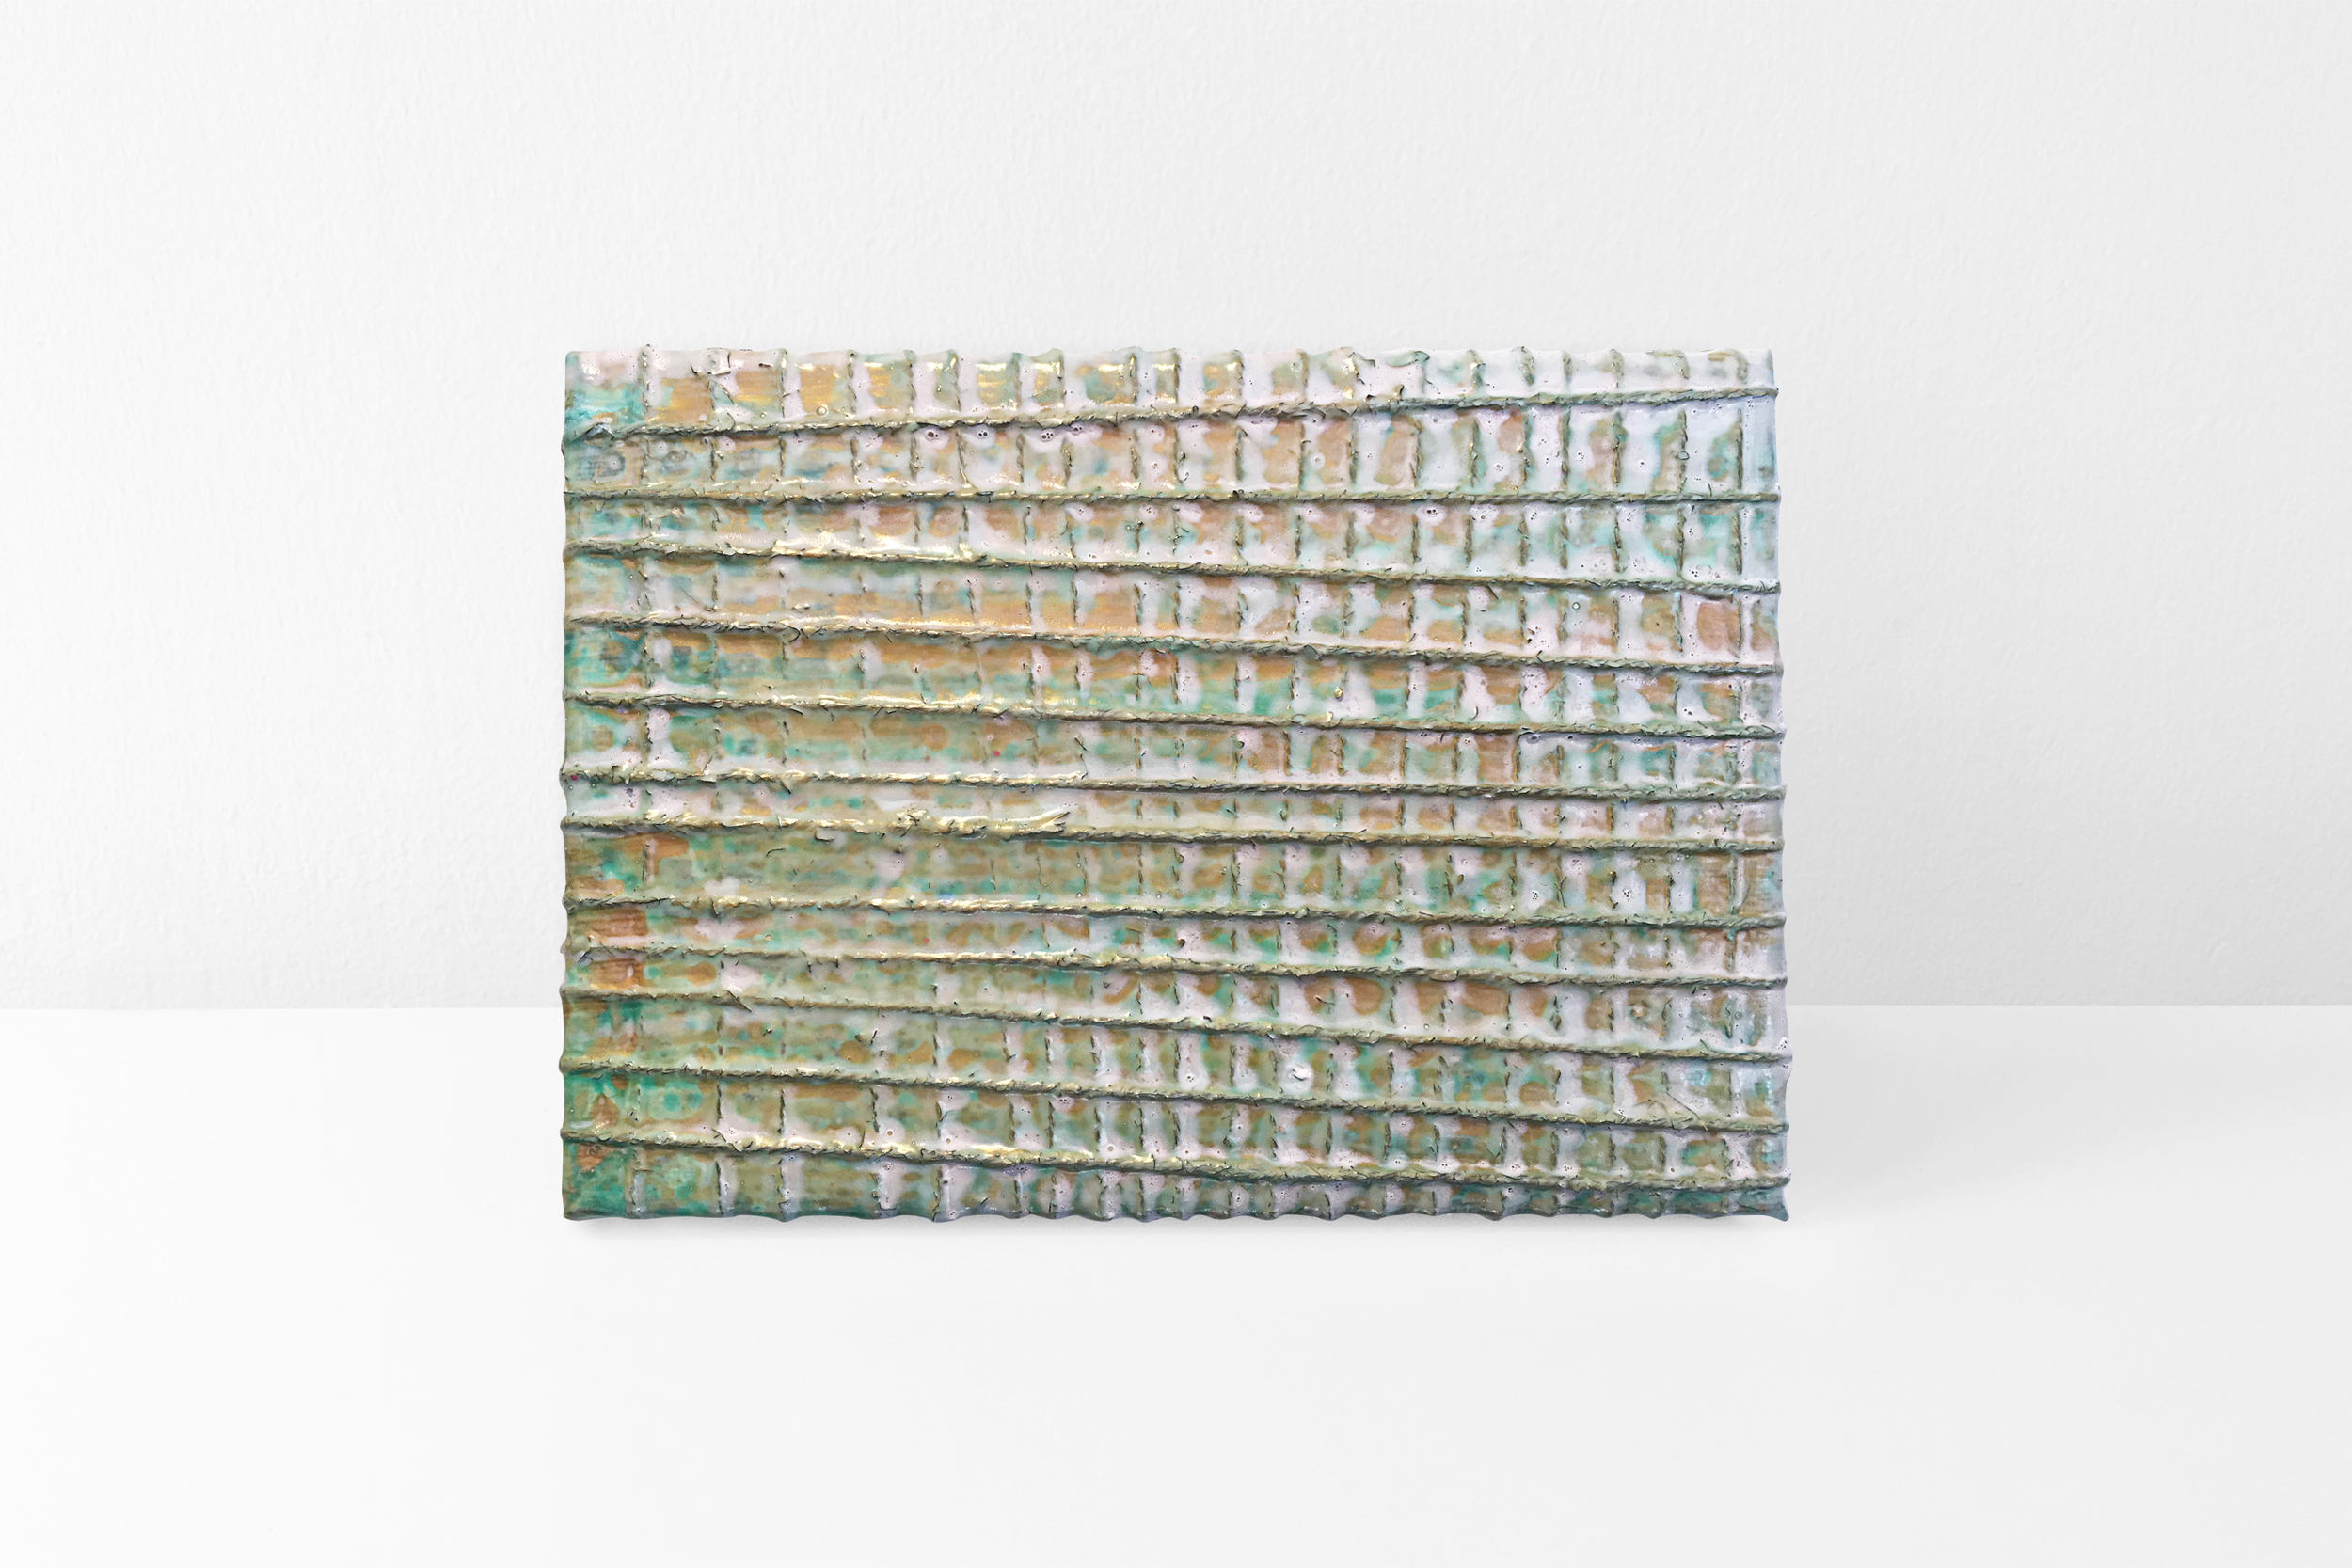  Mint wrap, 2017 mixed media on canvas 19x24 cm / 7.5x9 in EAF142   